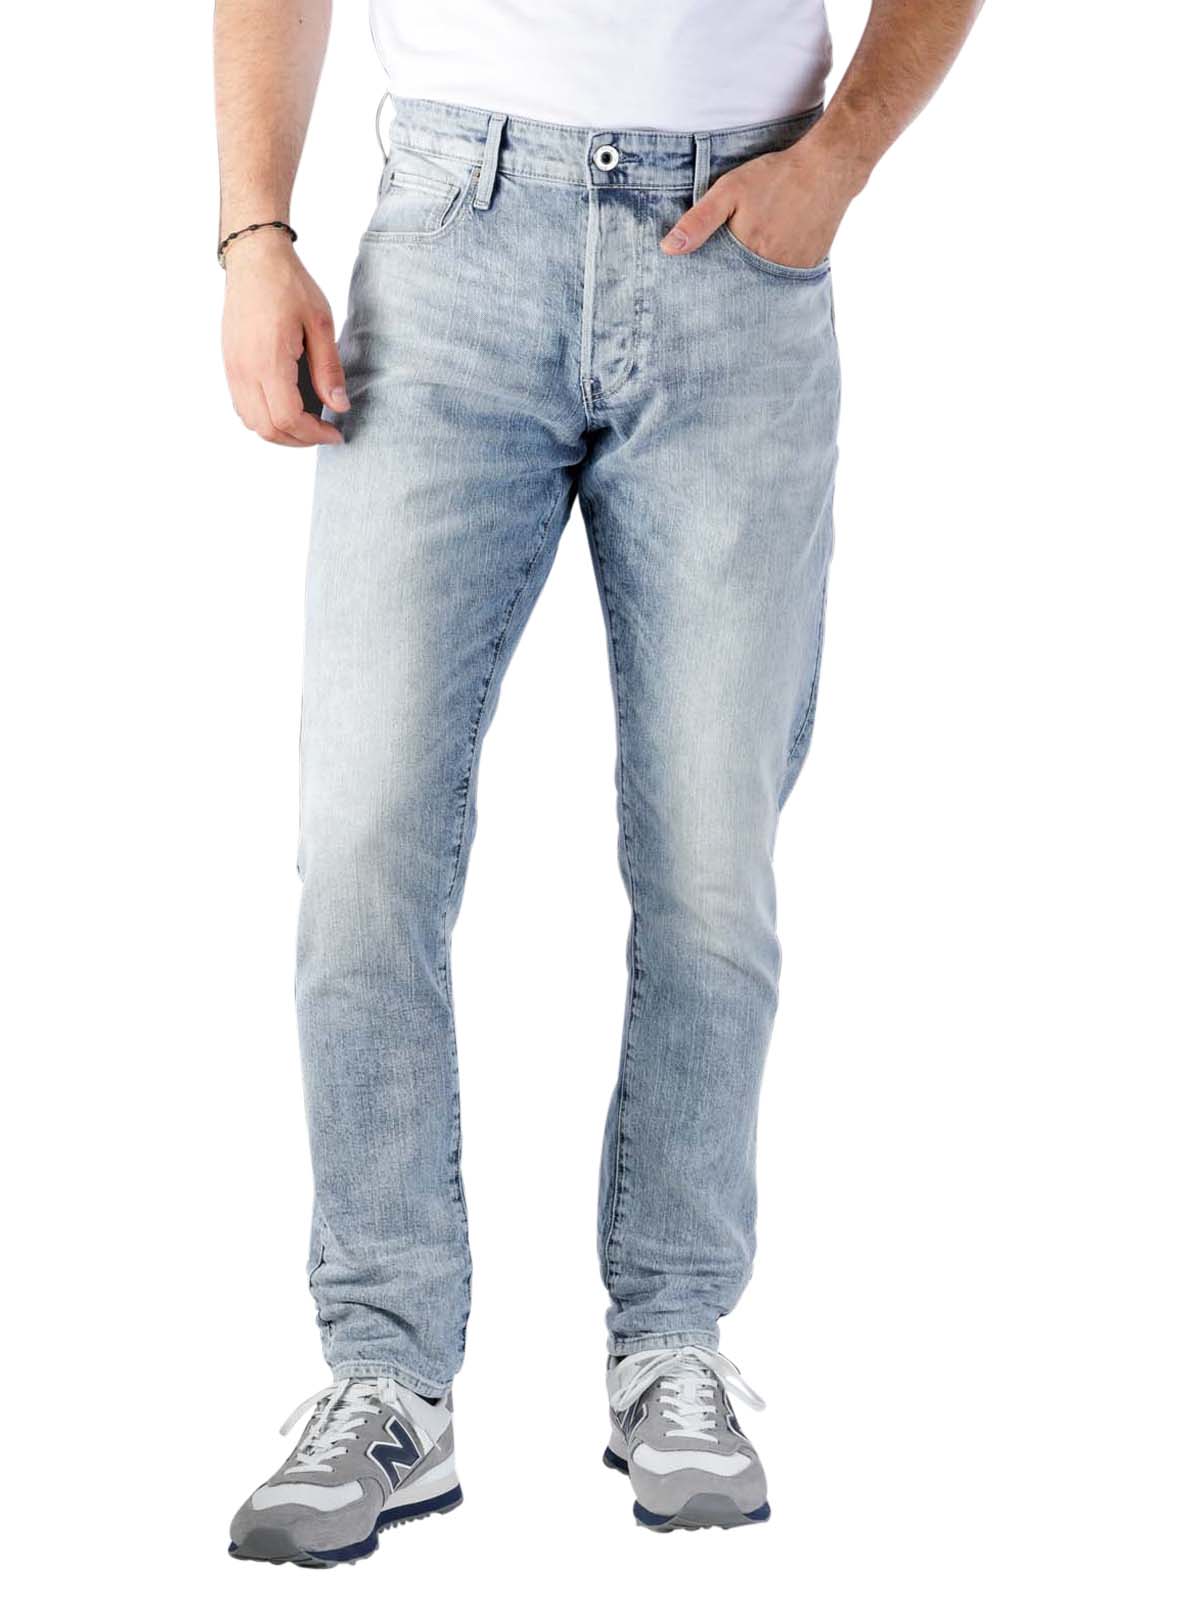 g star 3301 mens jeans